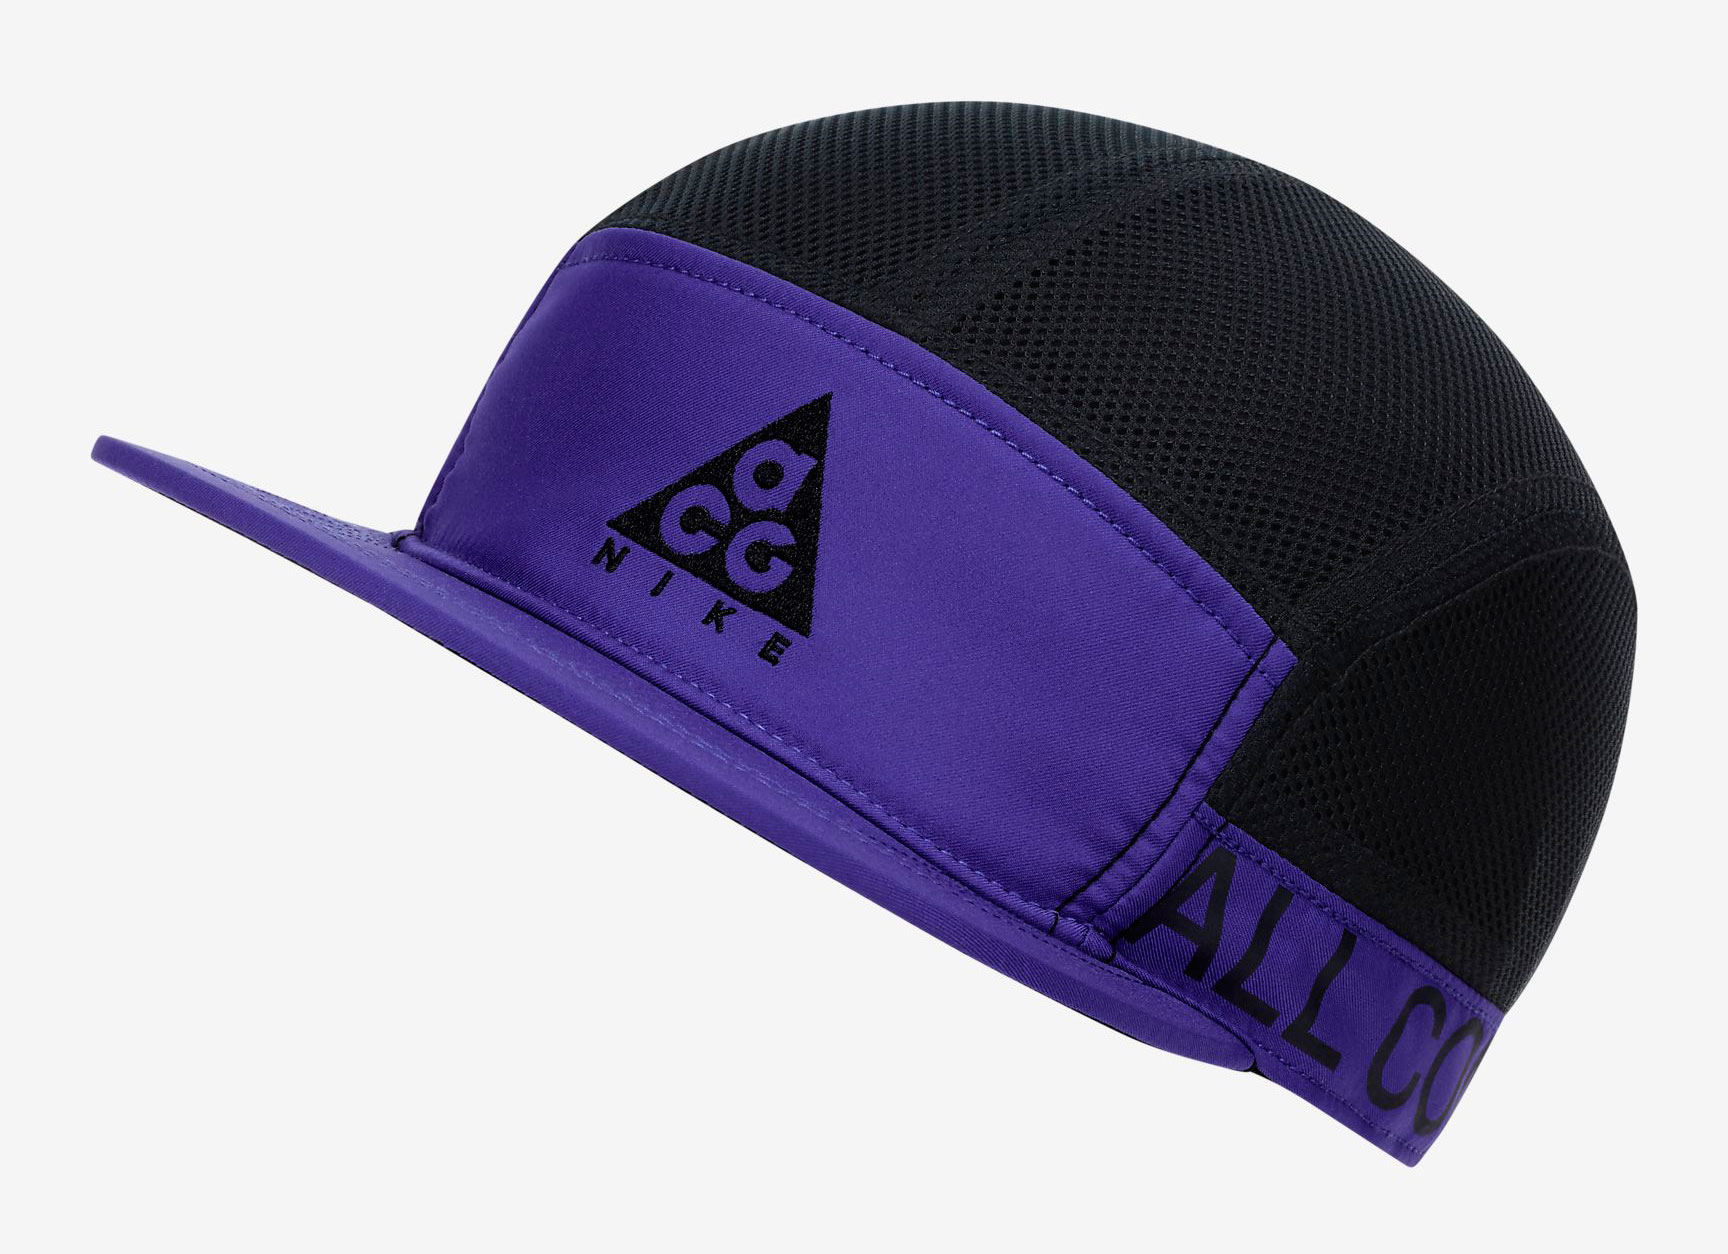 nike-acg-hat-purple-black-1